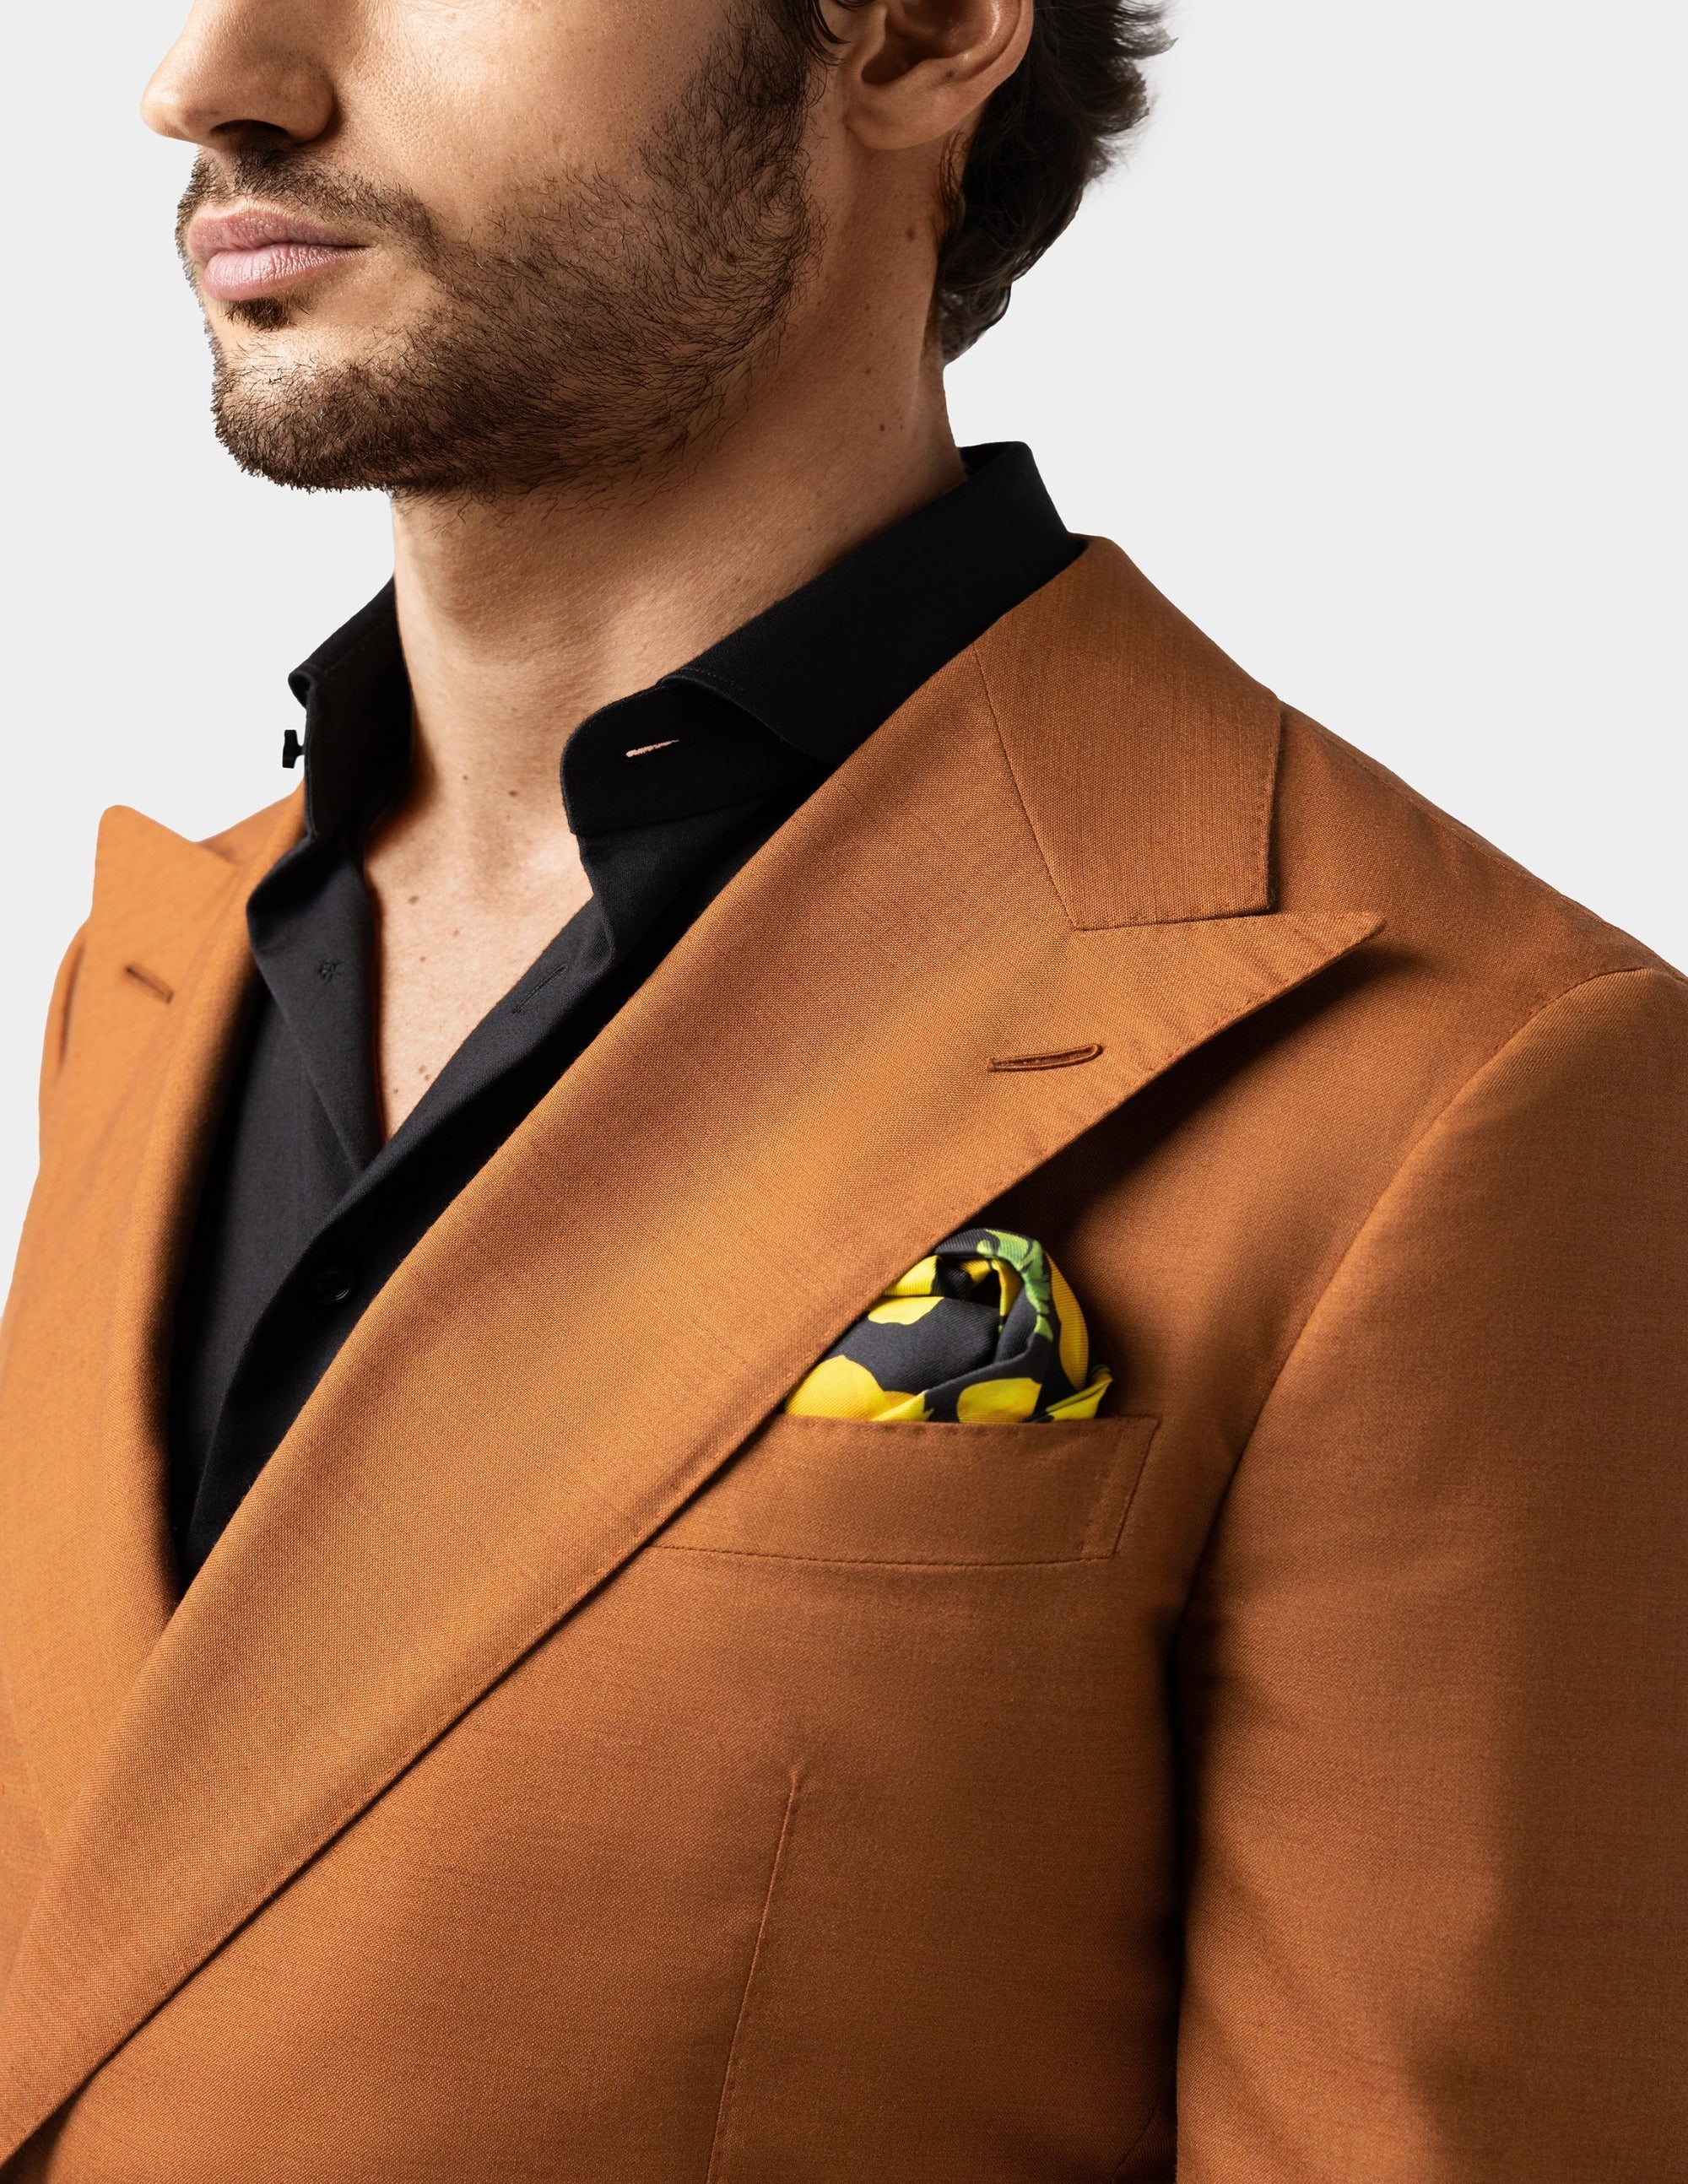 Orange Double Breasted Suit - Samir Bachkami